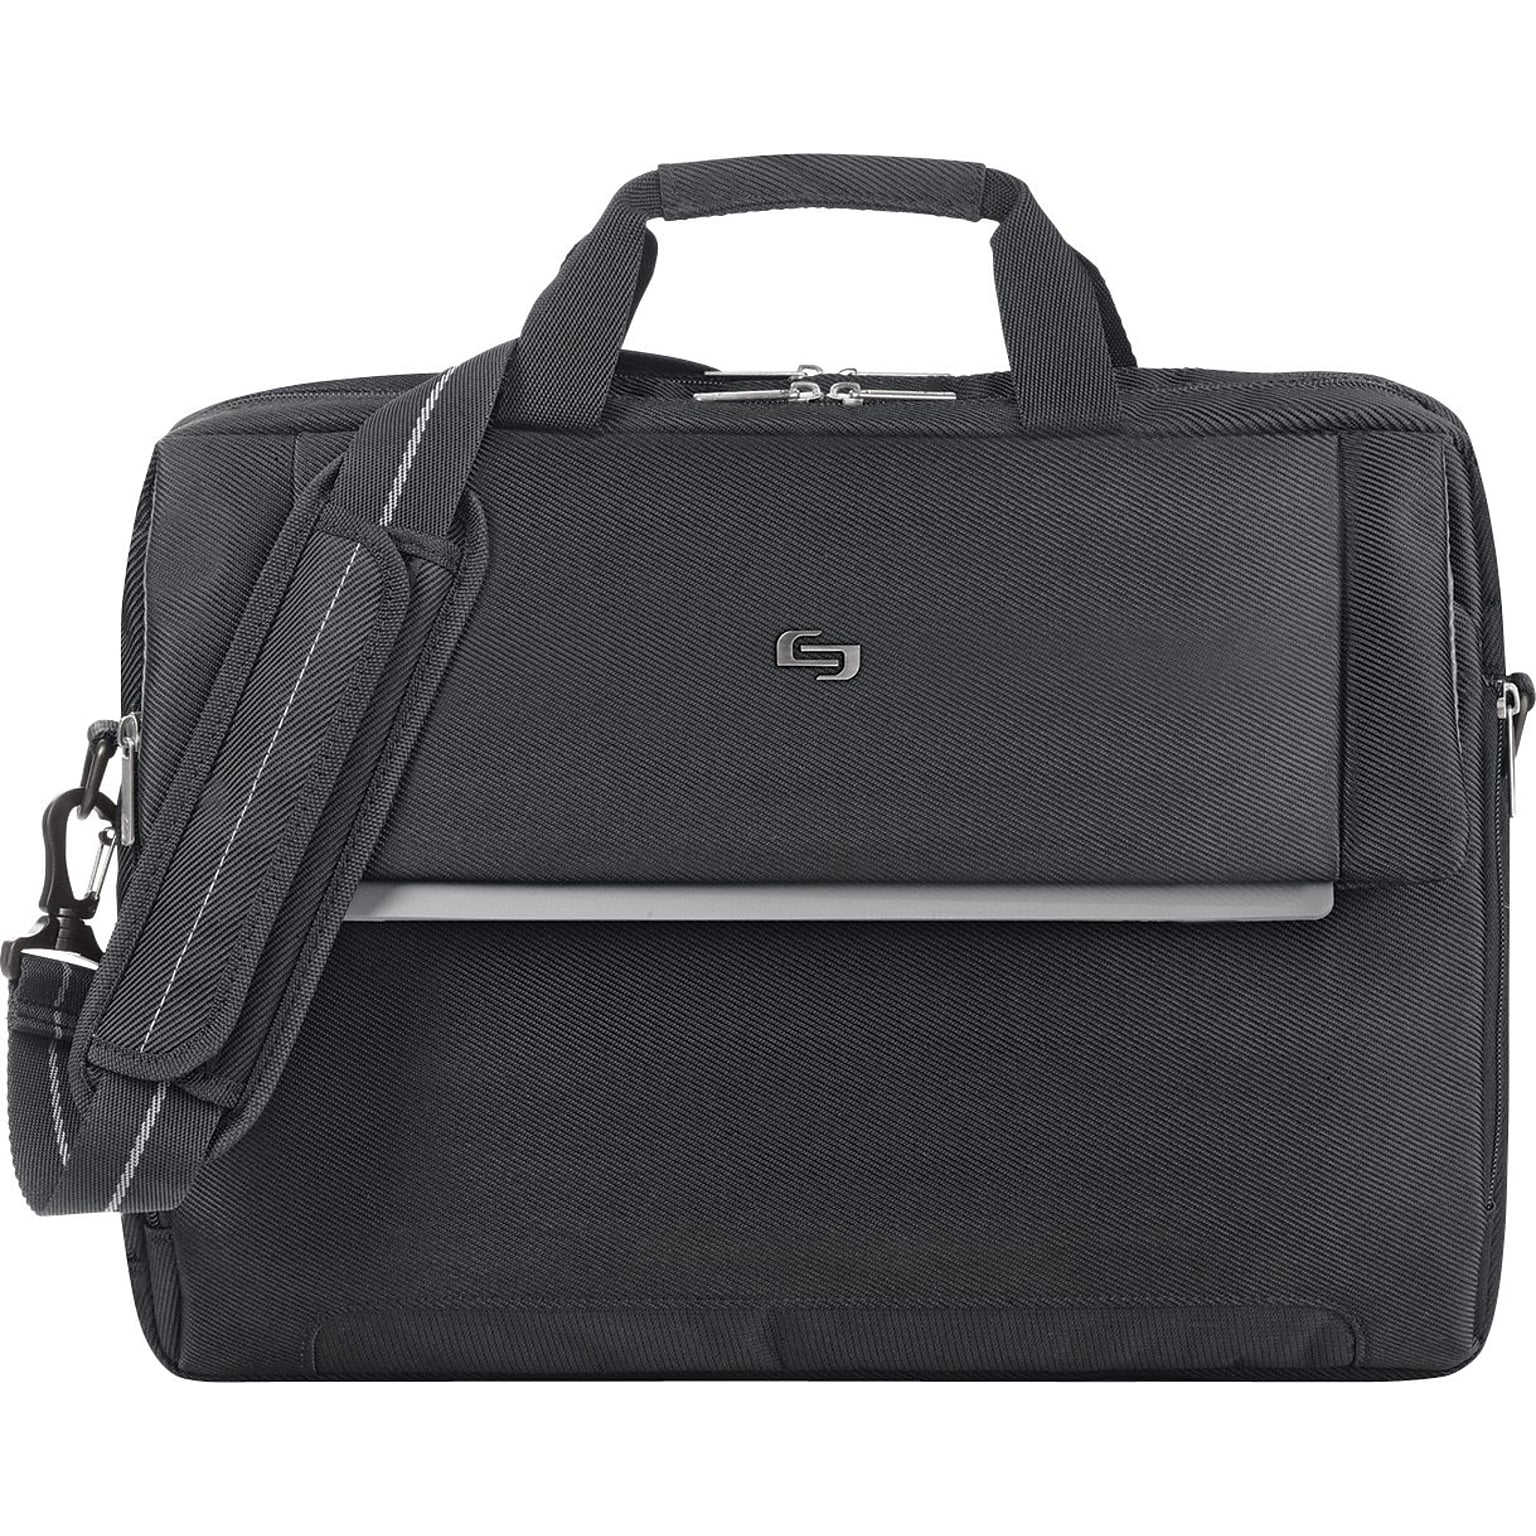 Solo New York Urban Polyester Laptop Briefcase, Black (LVL330-4)